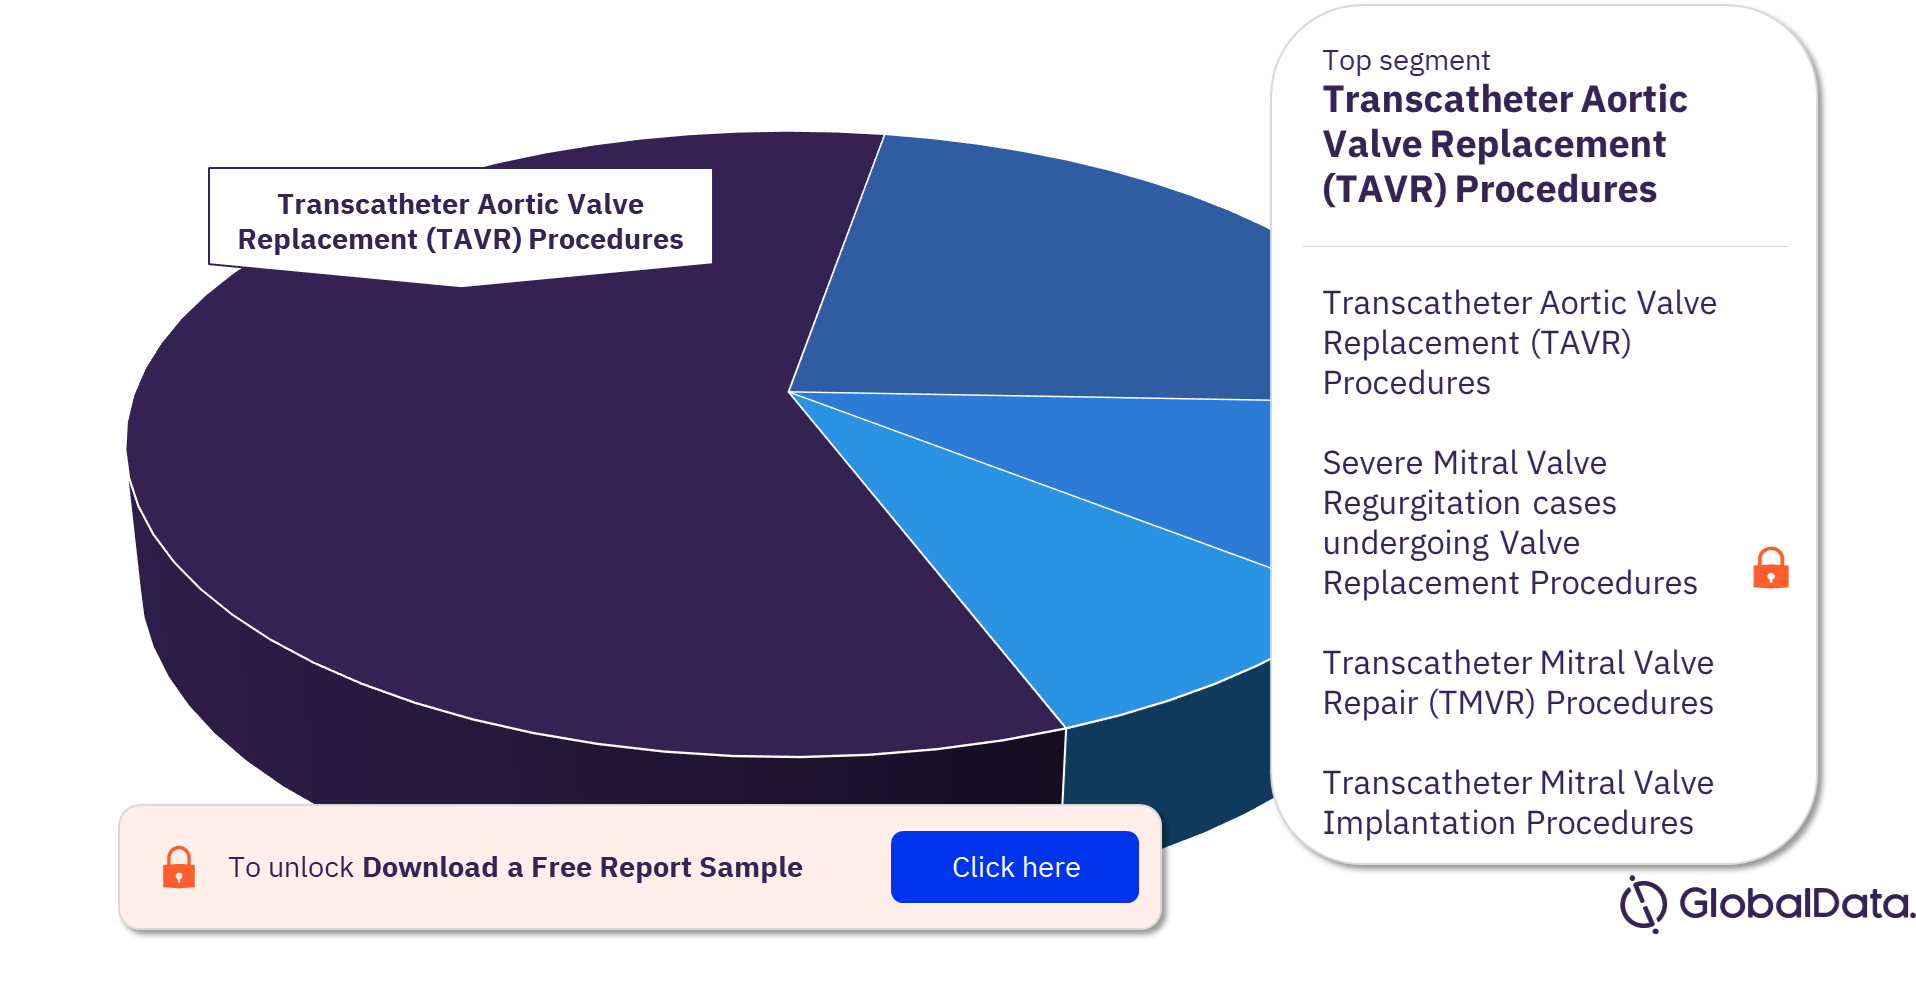 US Transcatheter Heart Valve Procedures Analysis by Segments